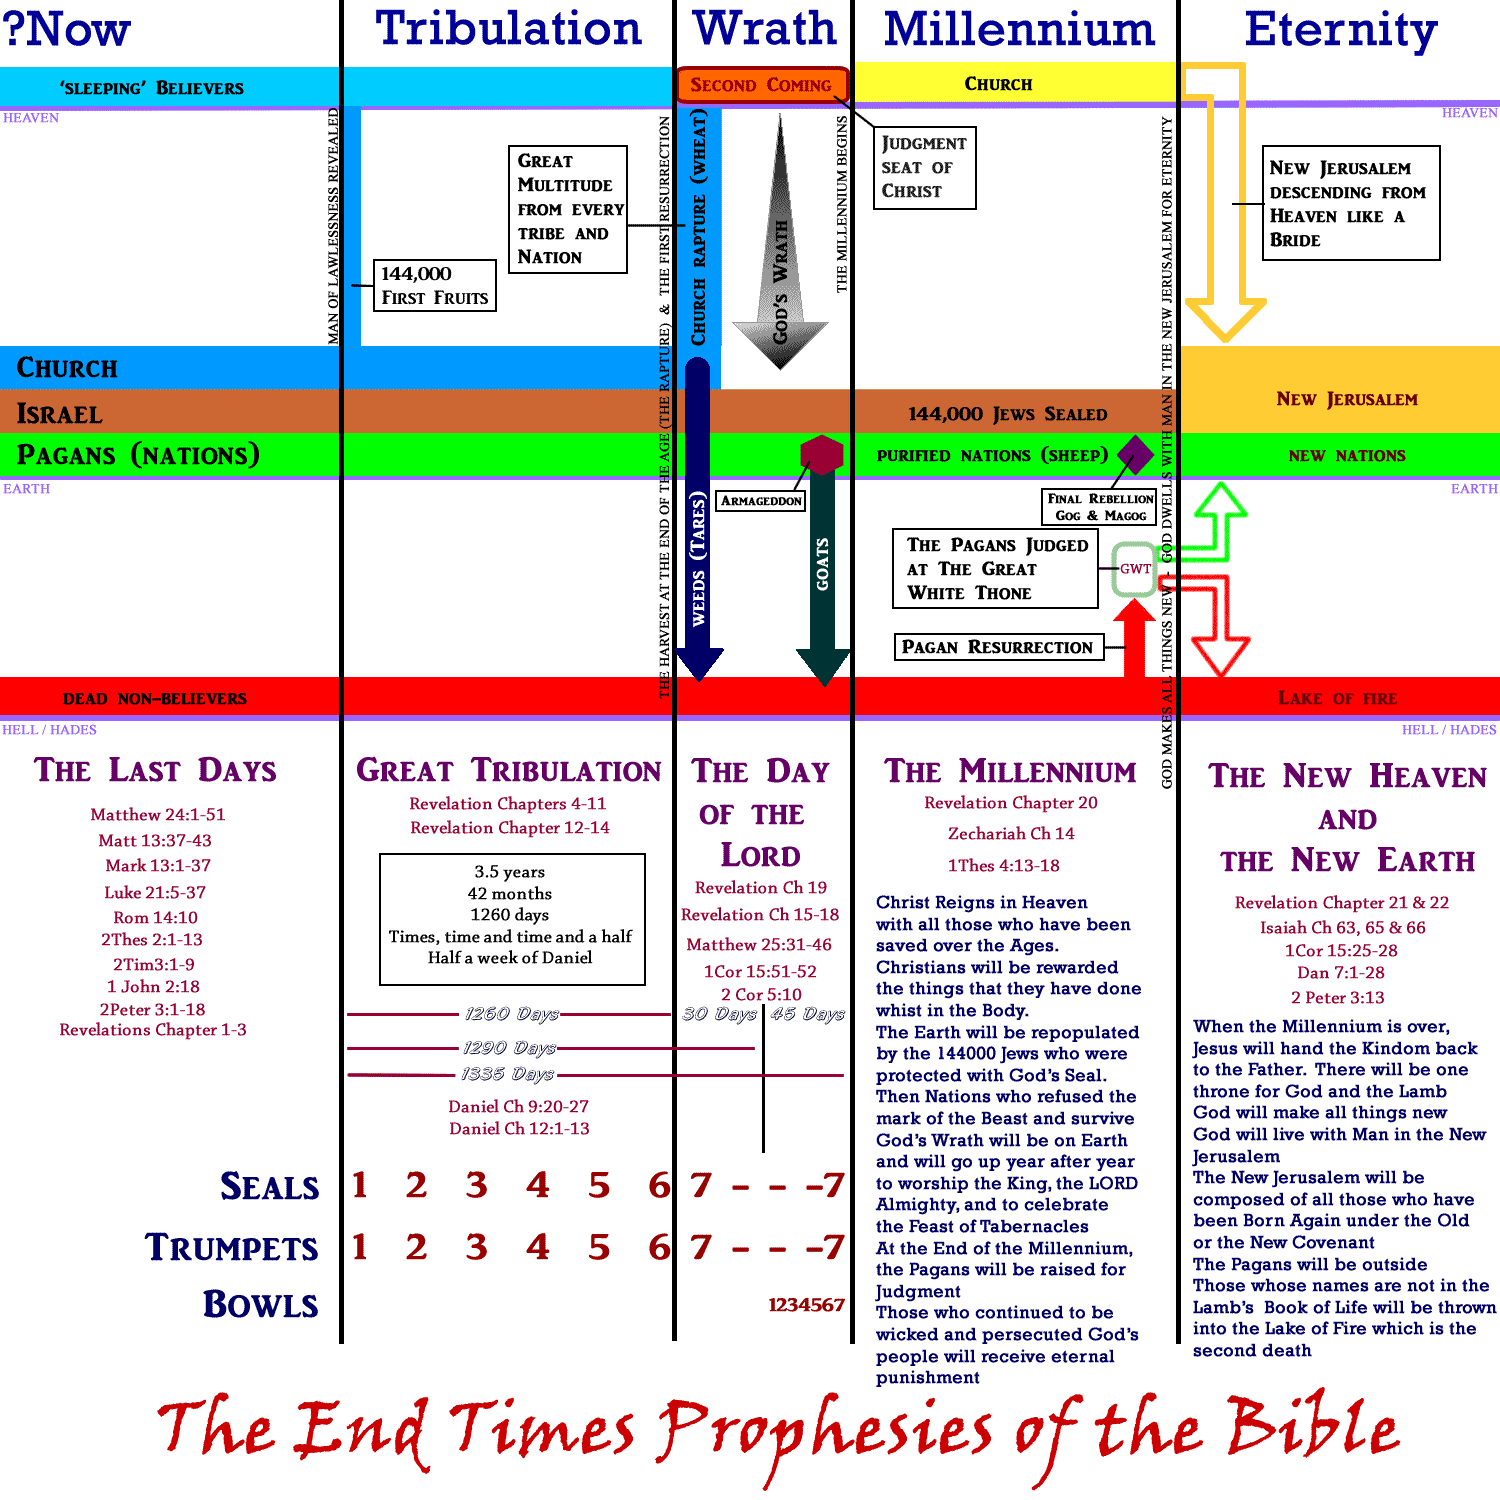 great tribulation 42 months 1260 1290 1335 days 3.5 years daniel sevens weeks prophesy end times last days bible revelation